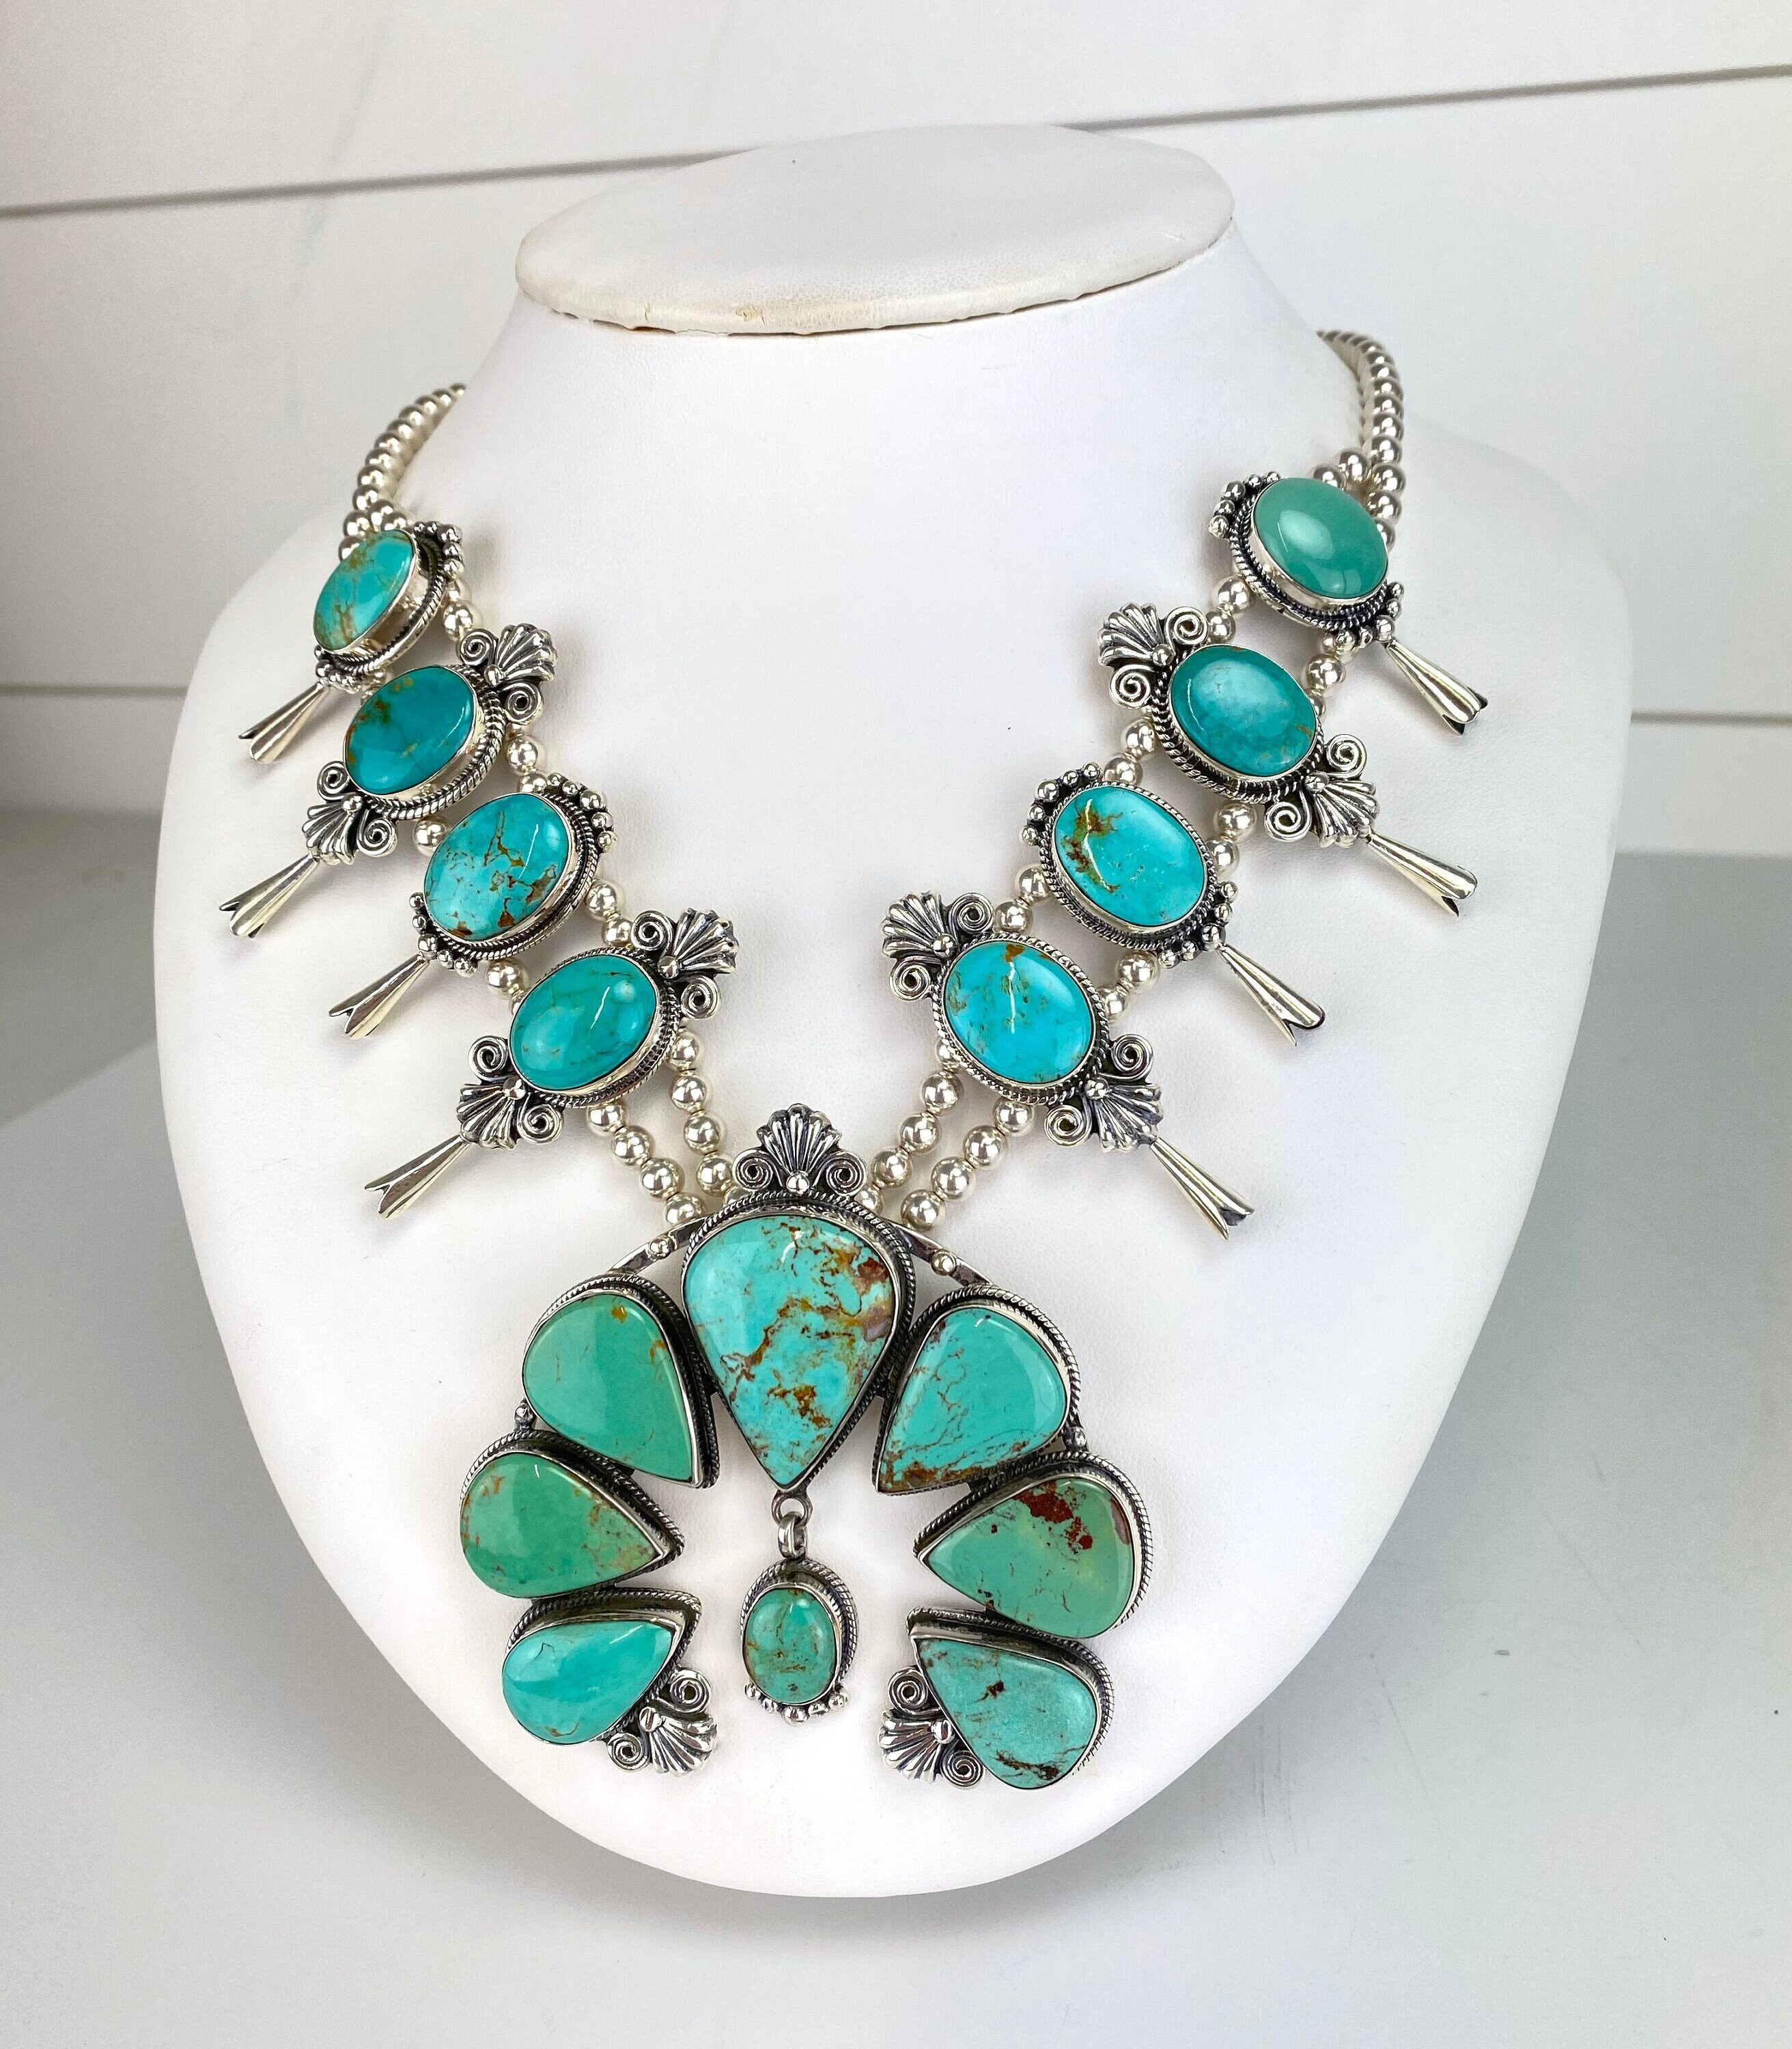 Vintage Navajo Squash Blossom Necklace, Natural Blue Turquoise